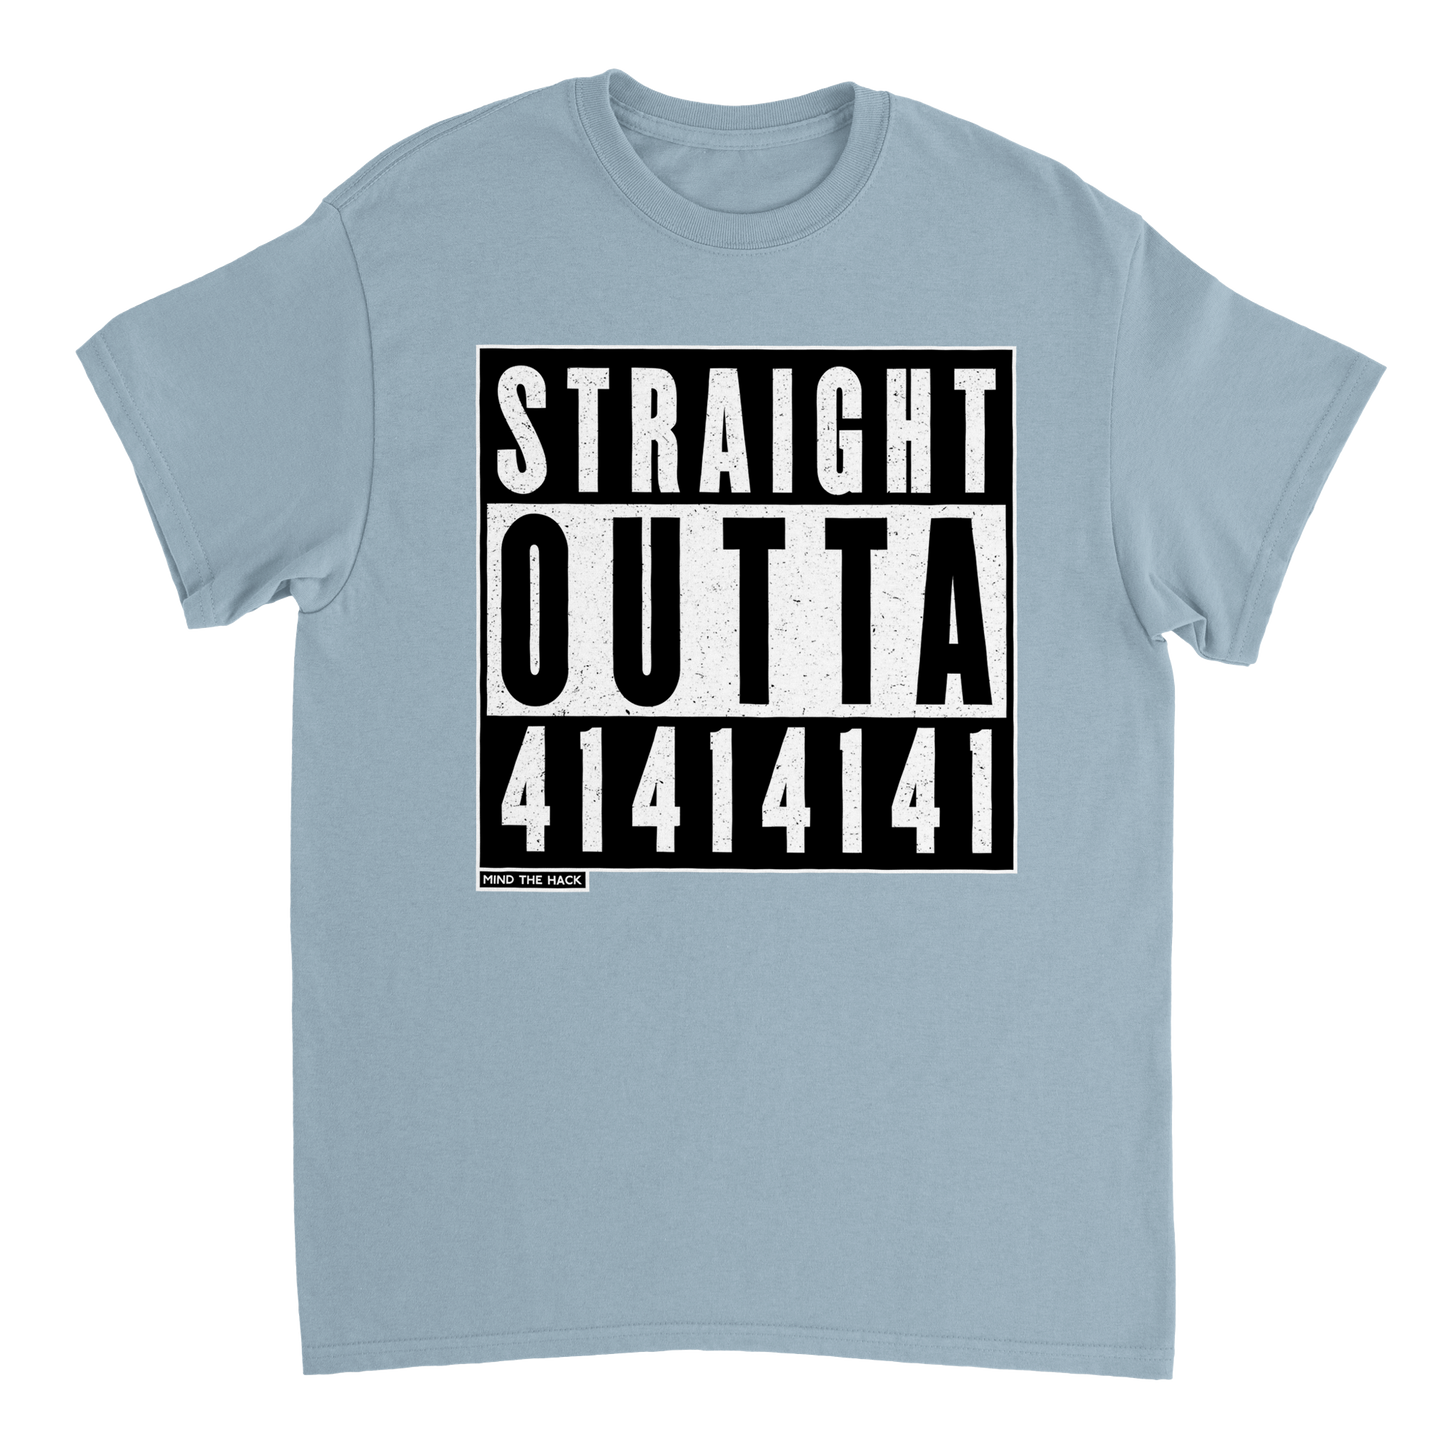 Straight outta 41414141 Unisex T-Shirt